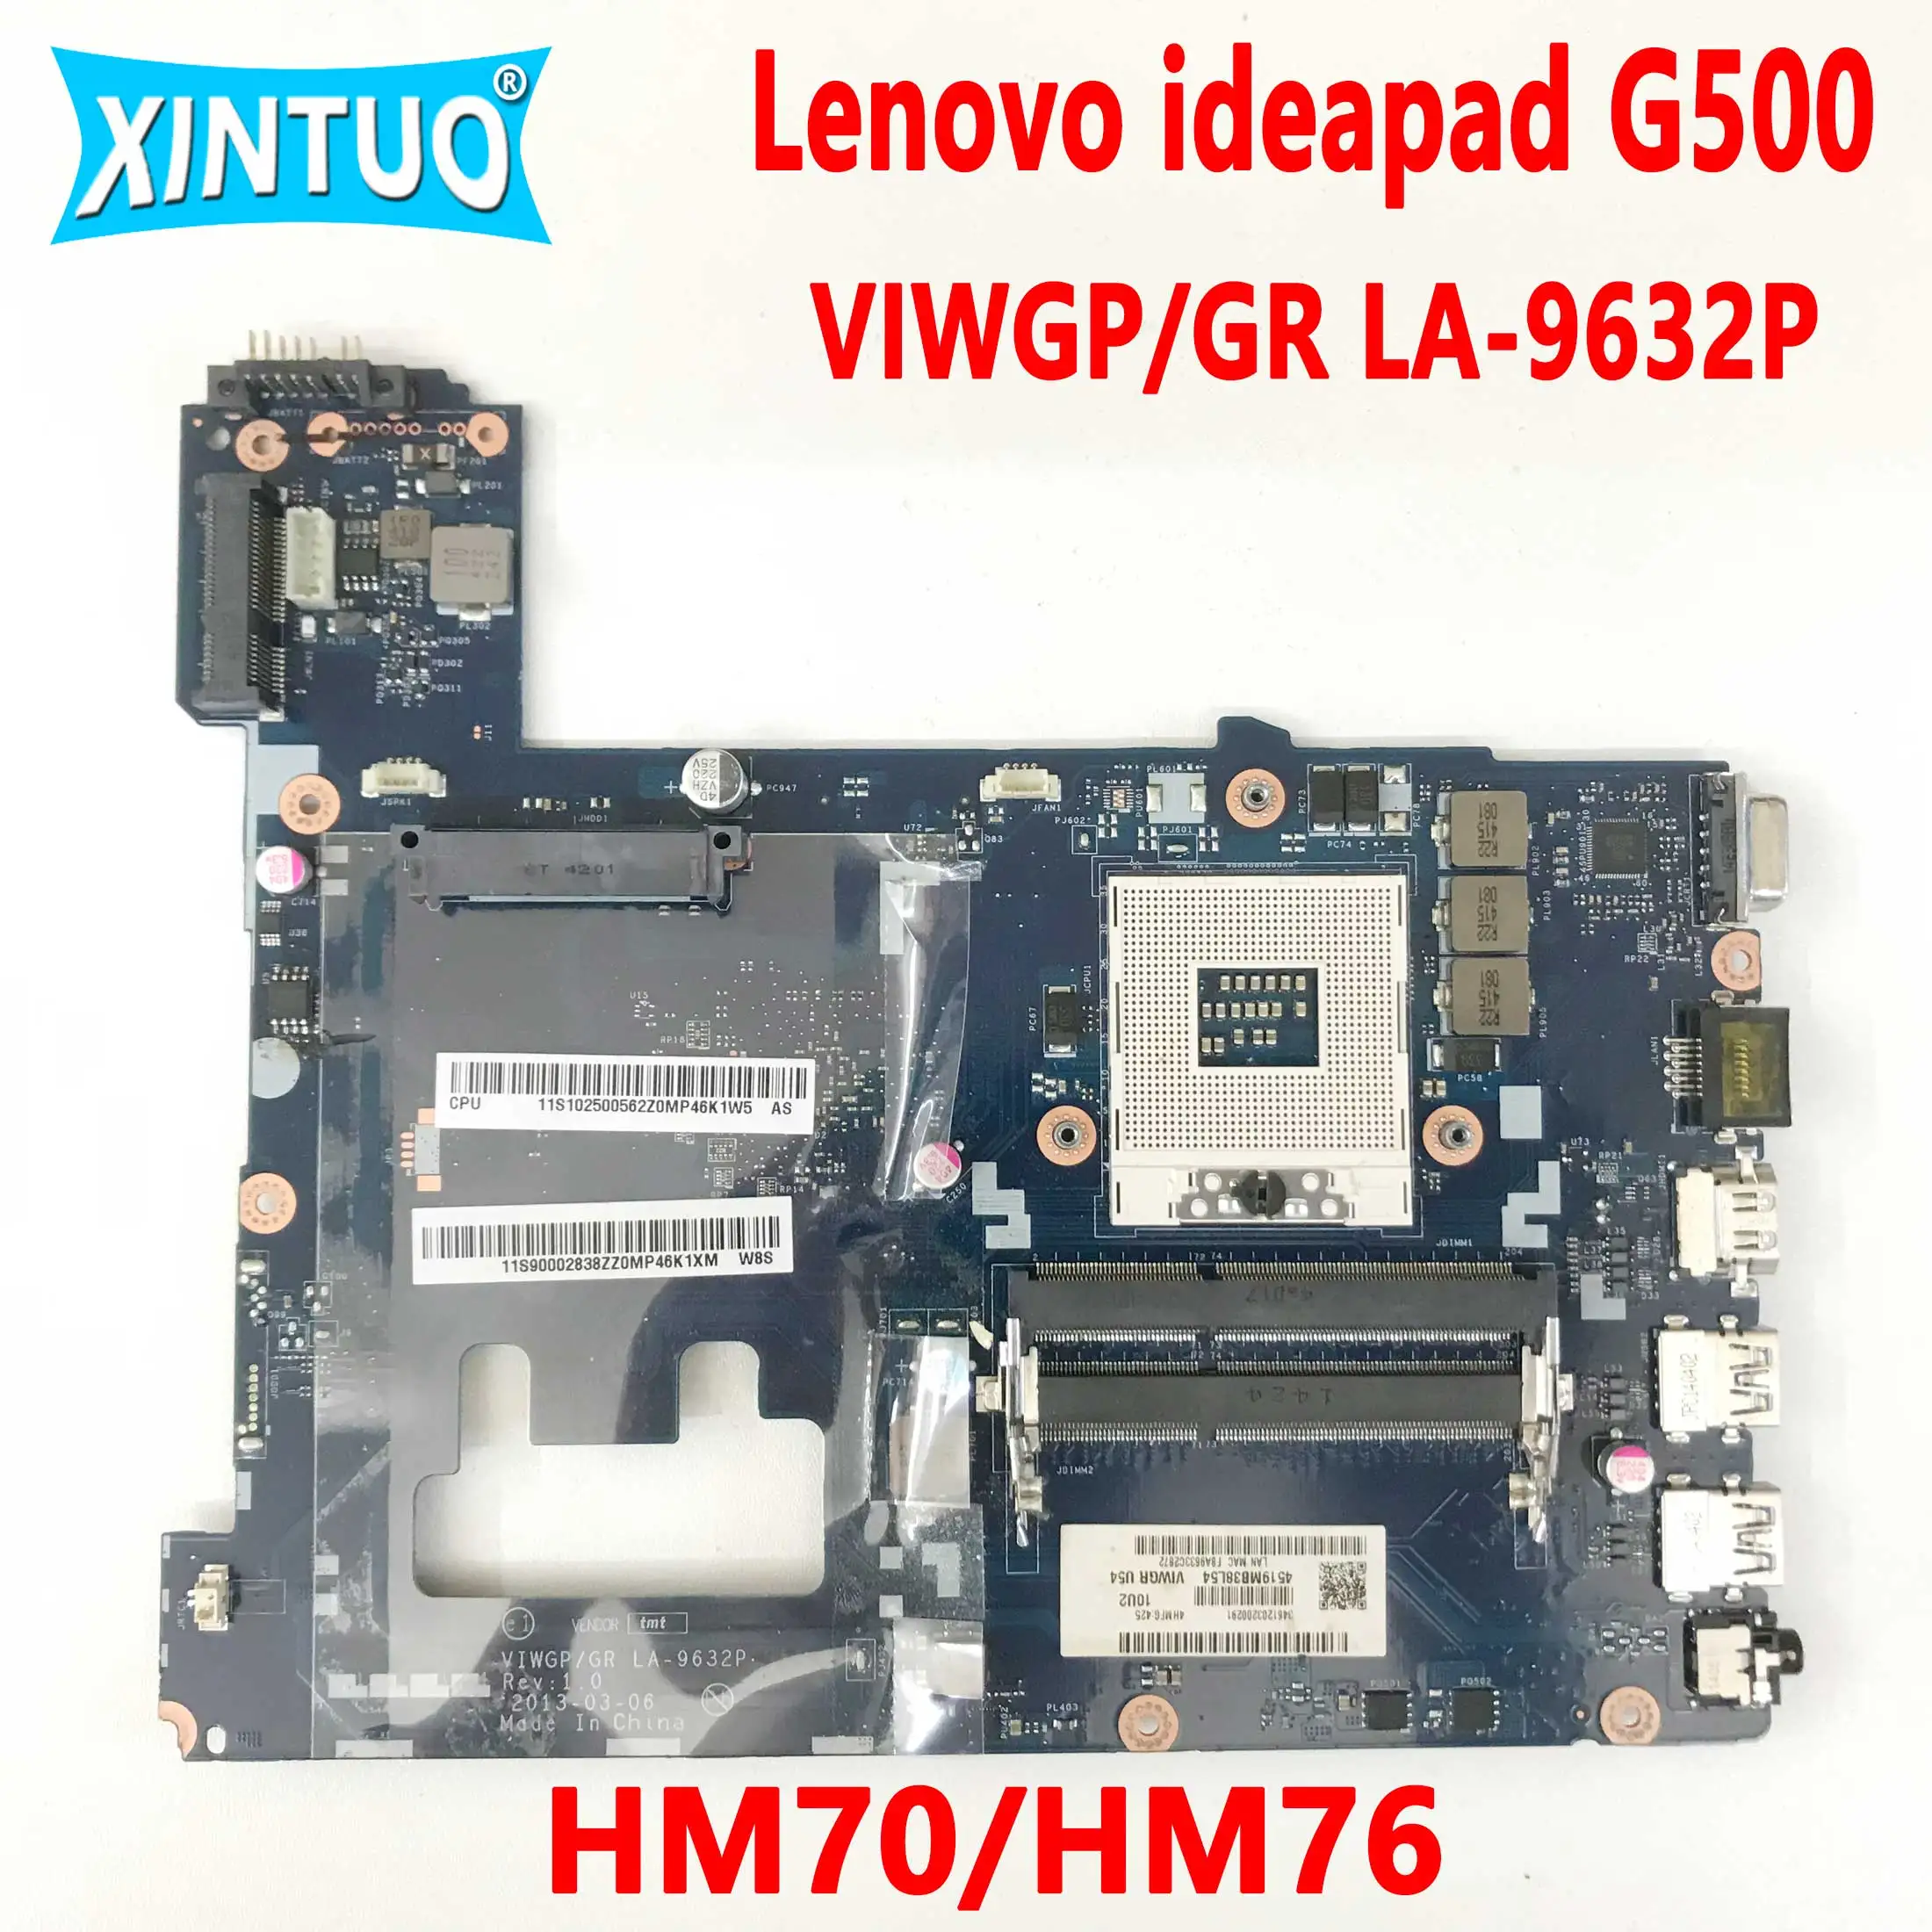 FRU:90002838 anakart Lenovo Ideapad G500 dizüstü anakart VIWGP/GR LA-9632P  HM70 HM76 DDR3 100% test çalışması - AliExpress